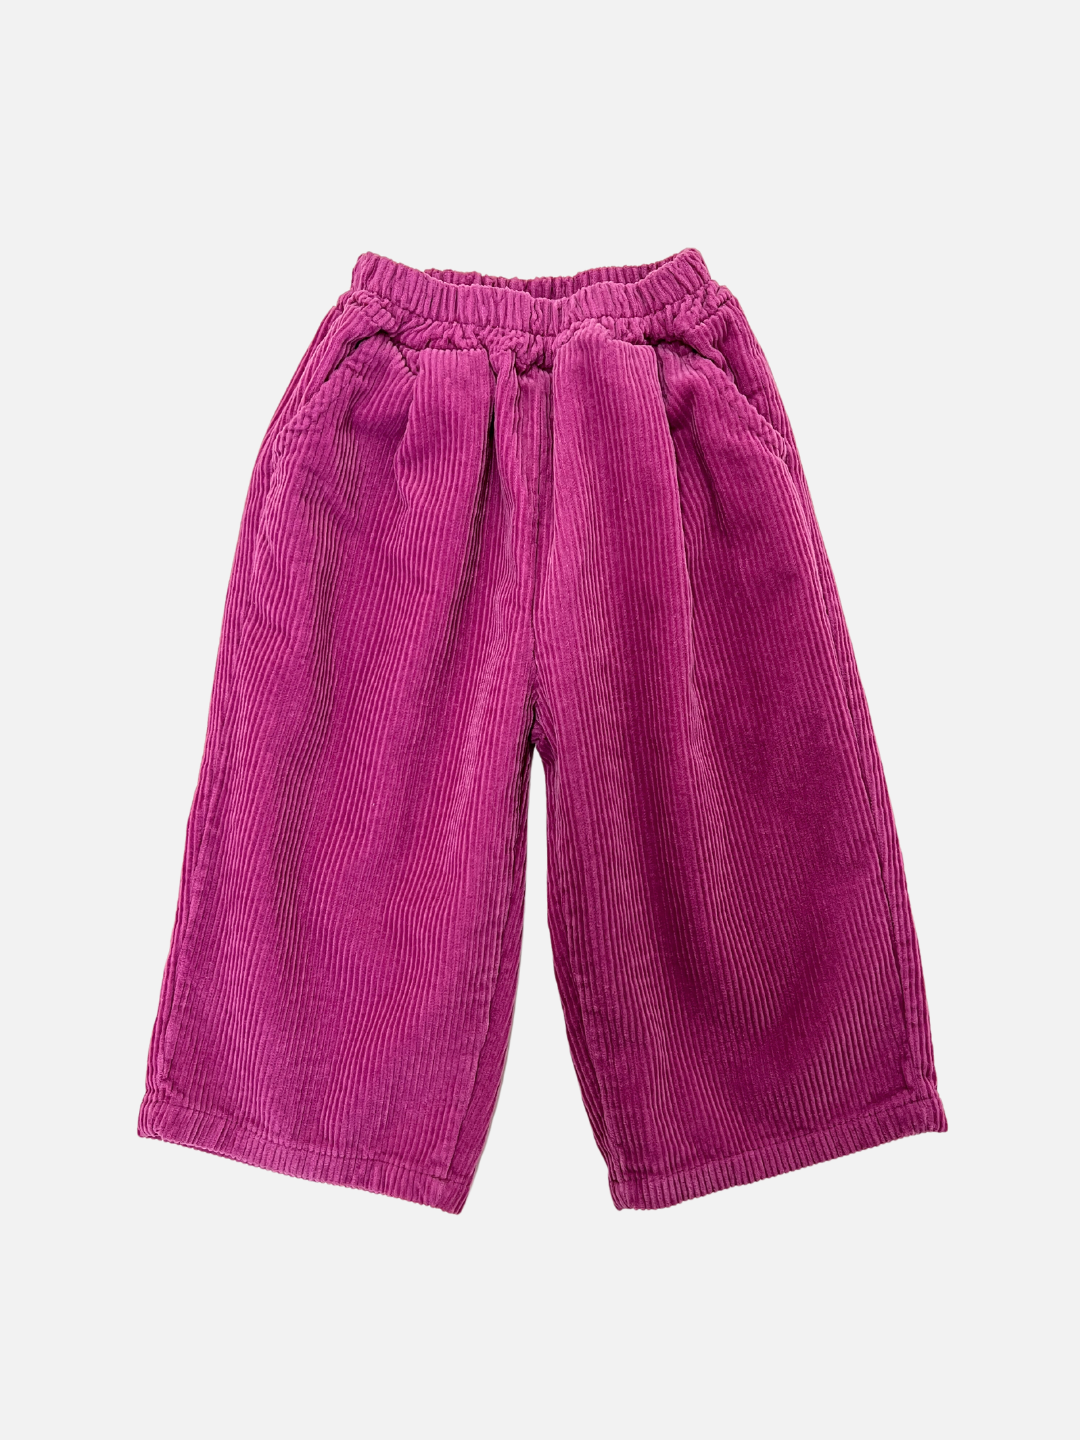 Magenta | Front view of kids wide-leg corduroy pants in magenta pink.